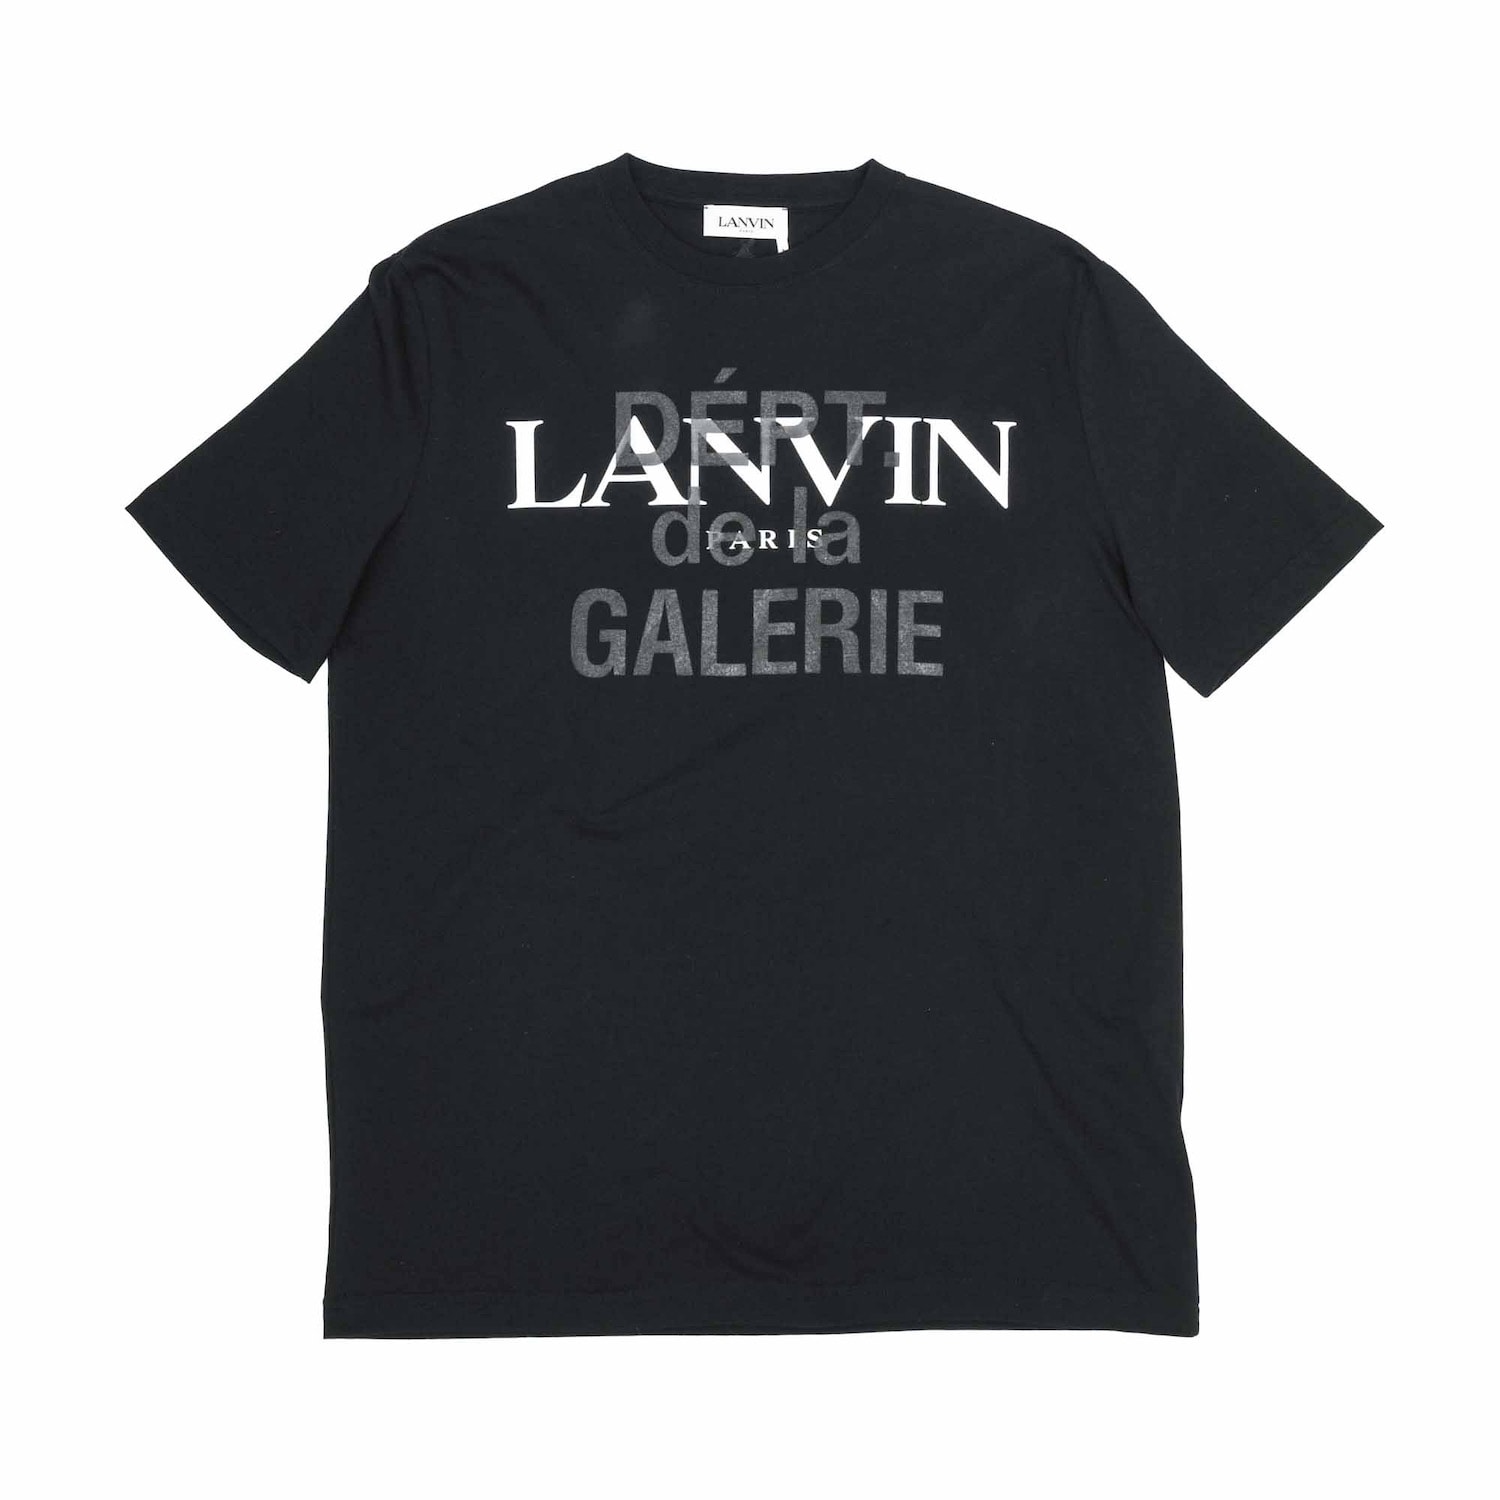 LANVIN 携手 Gallery Department 打造 2021 全新联名限定系列